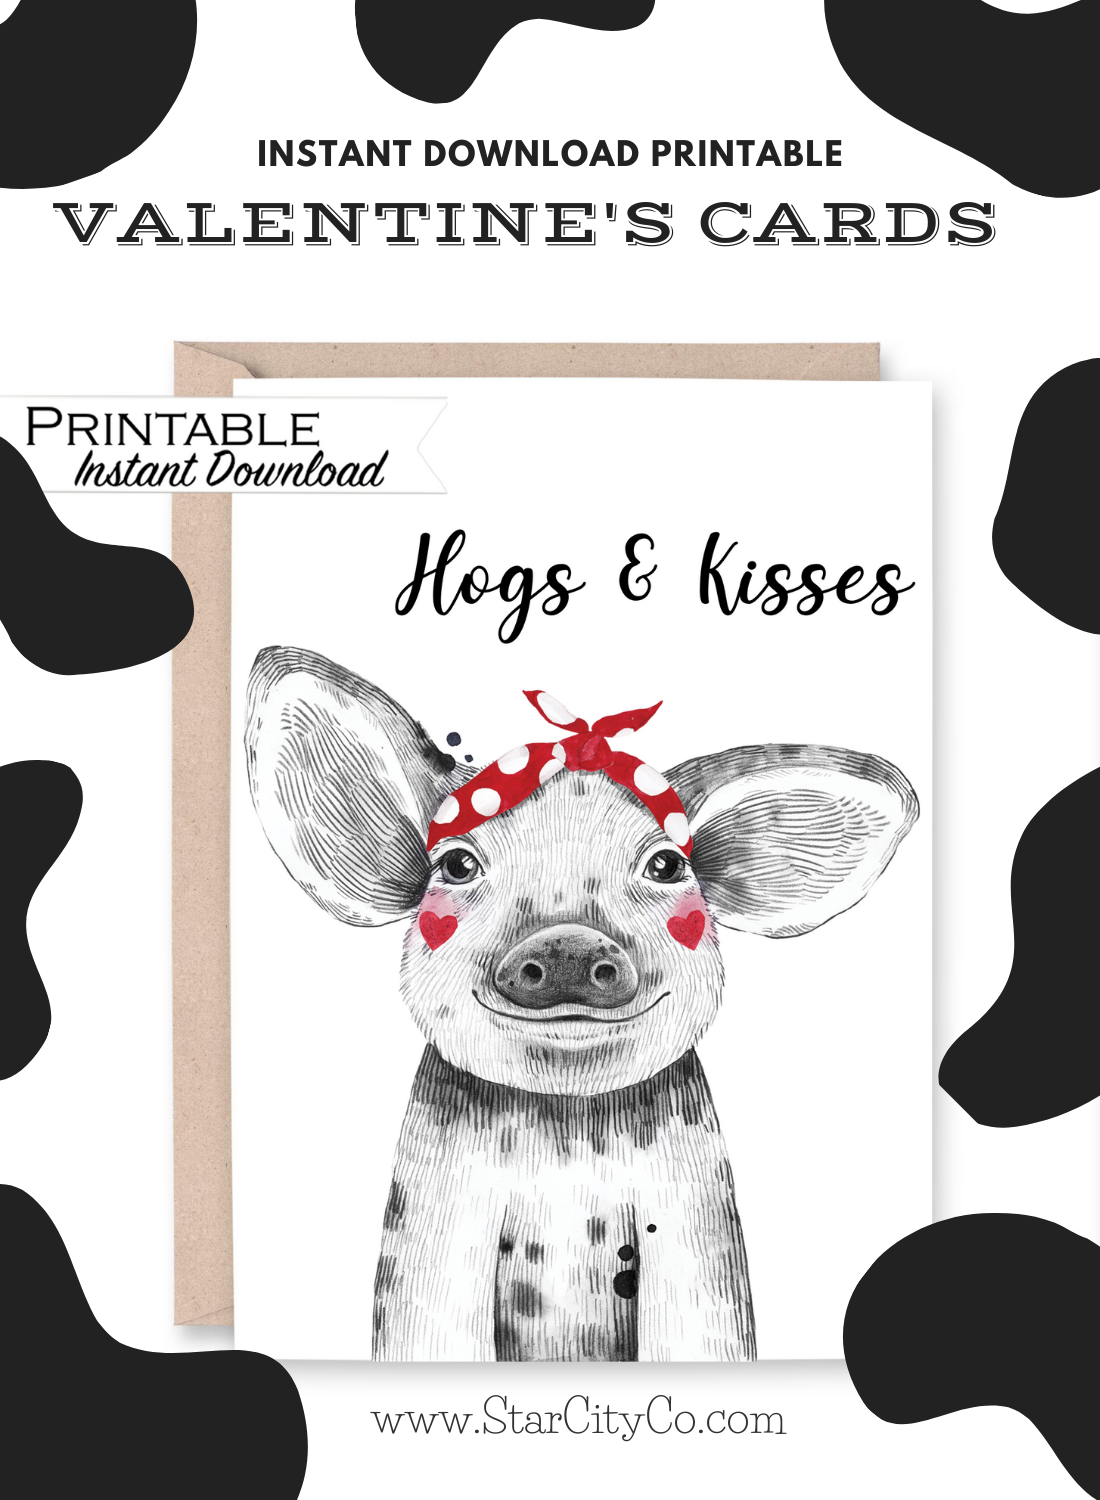 Hogs and Kisses Funny Pig Anniversary Card Printable - Digital Download